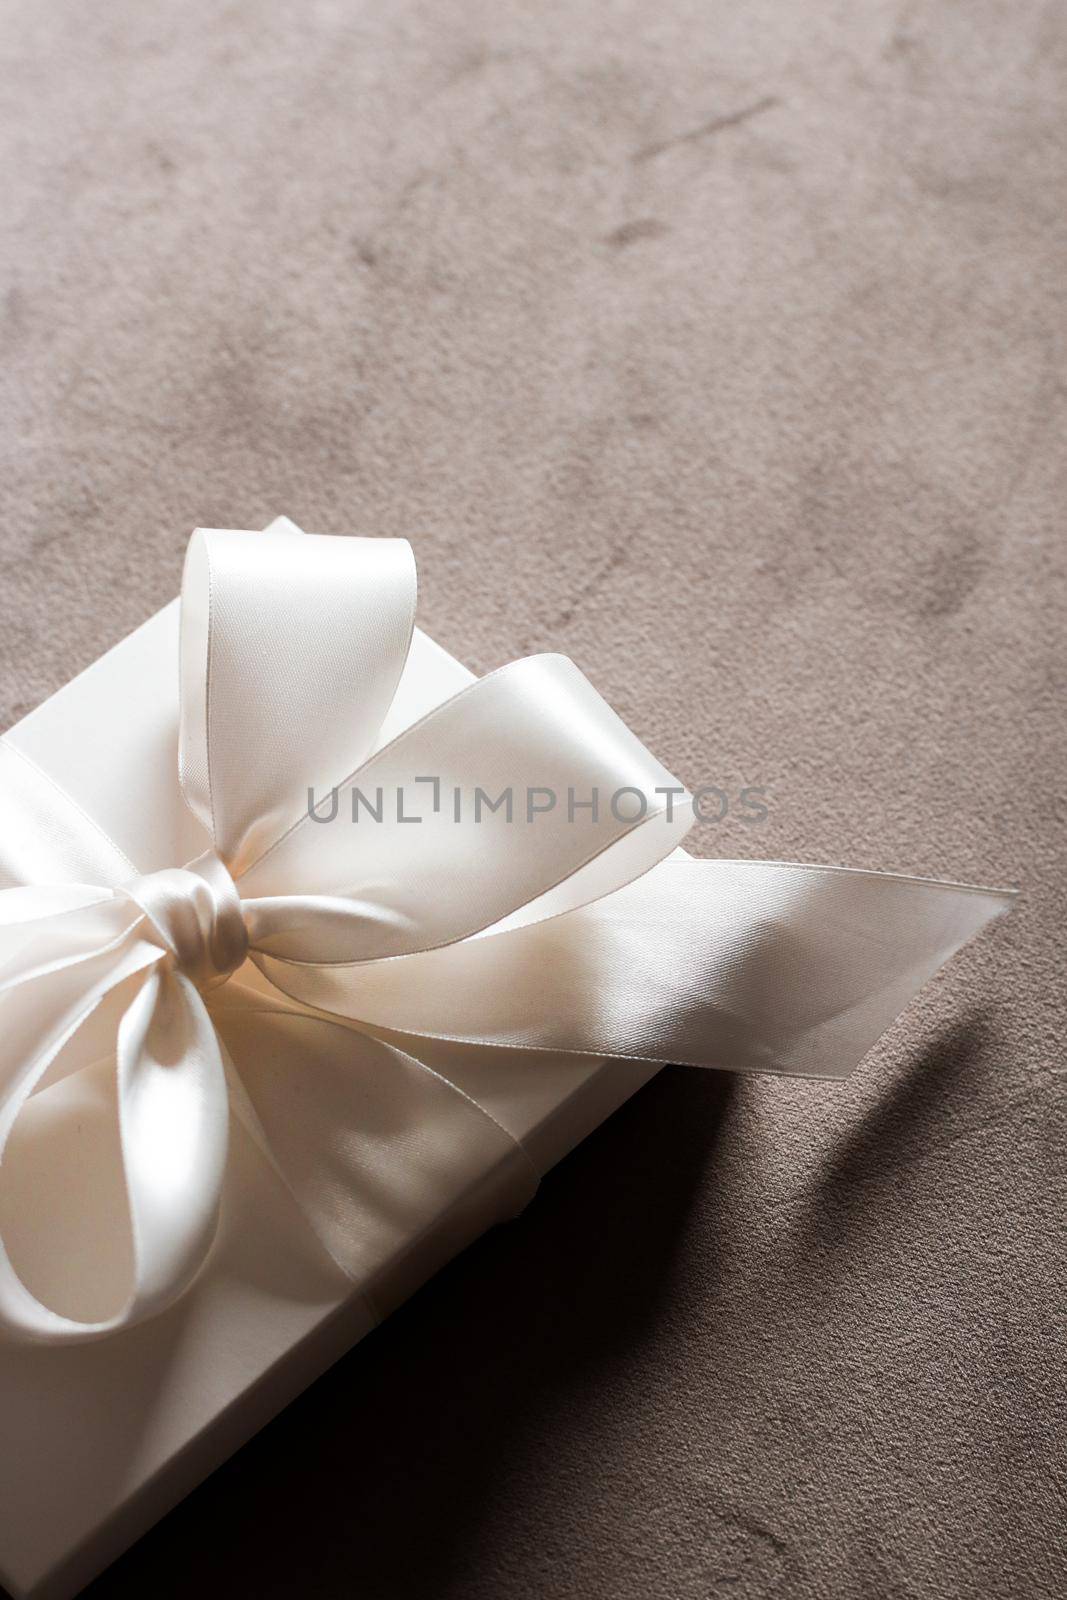 Romantic celebration, lifestyle and birthday present concept - Luxury holiday gift box